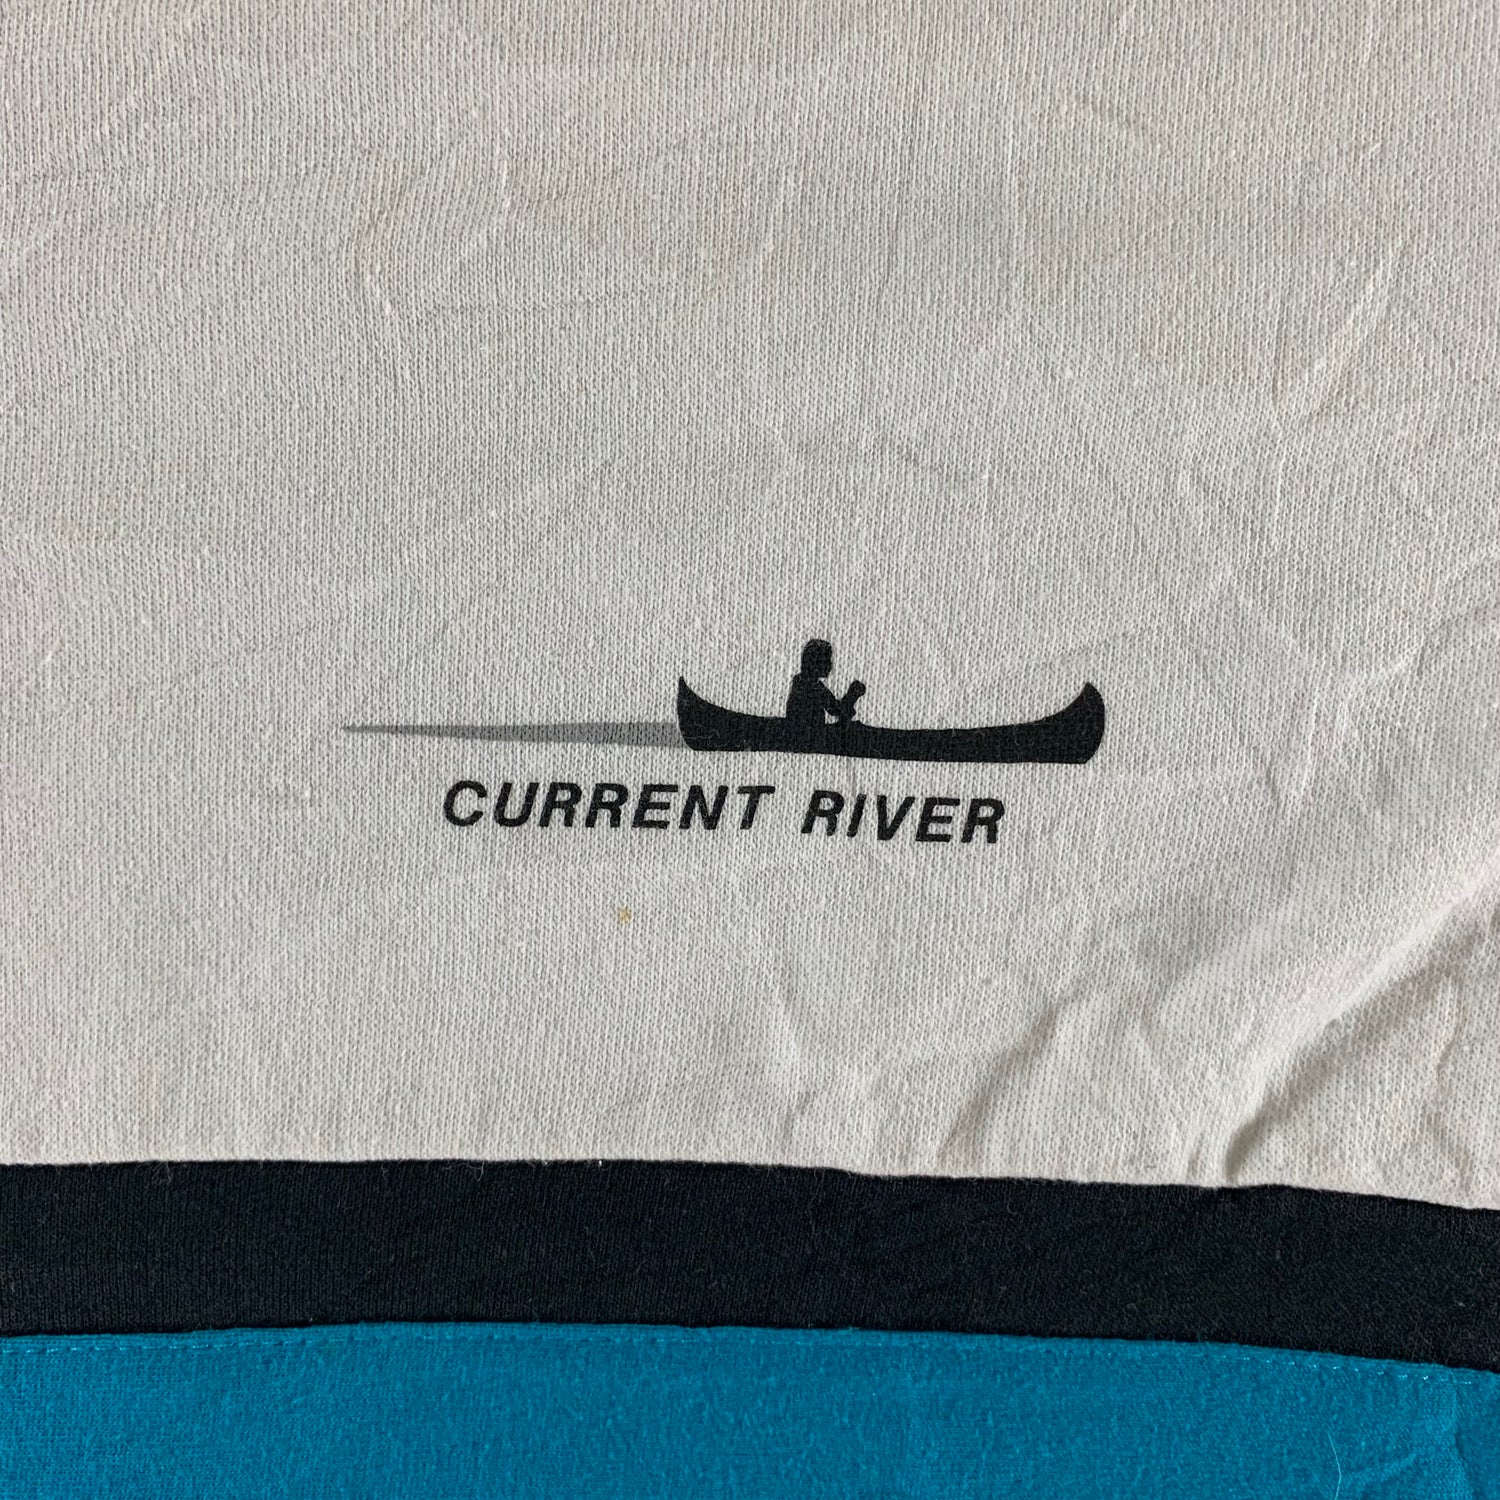 Vintage 1980s Current River T-shirt size Large